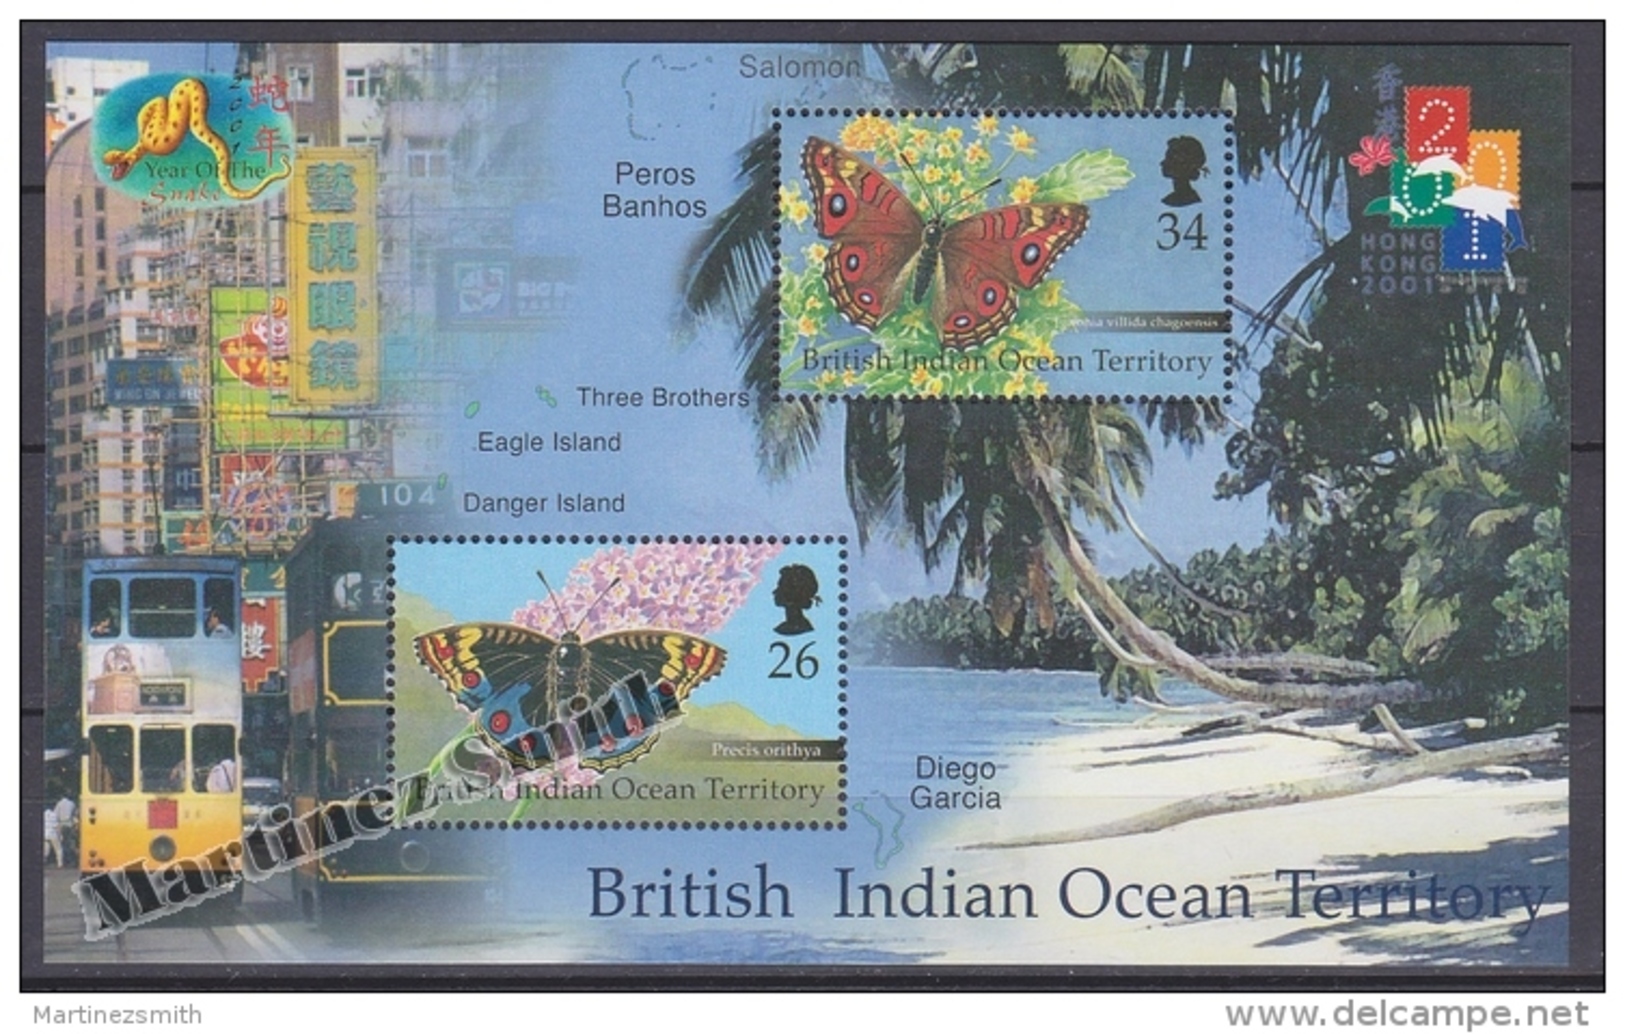 British Indian Ocean 2001 Yvert BF 15, Hong Kong 2001 Philatelic Exhibition, Butterflies - Miniature Sheet- MNH - British Indian Ocean Territory (BIOT)